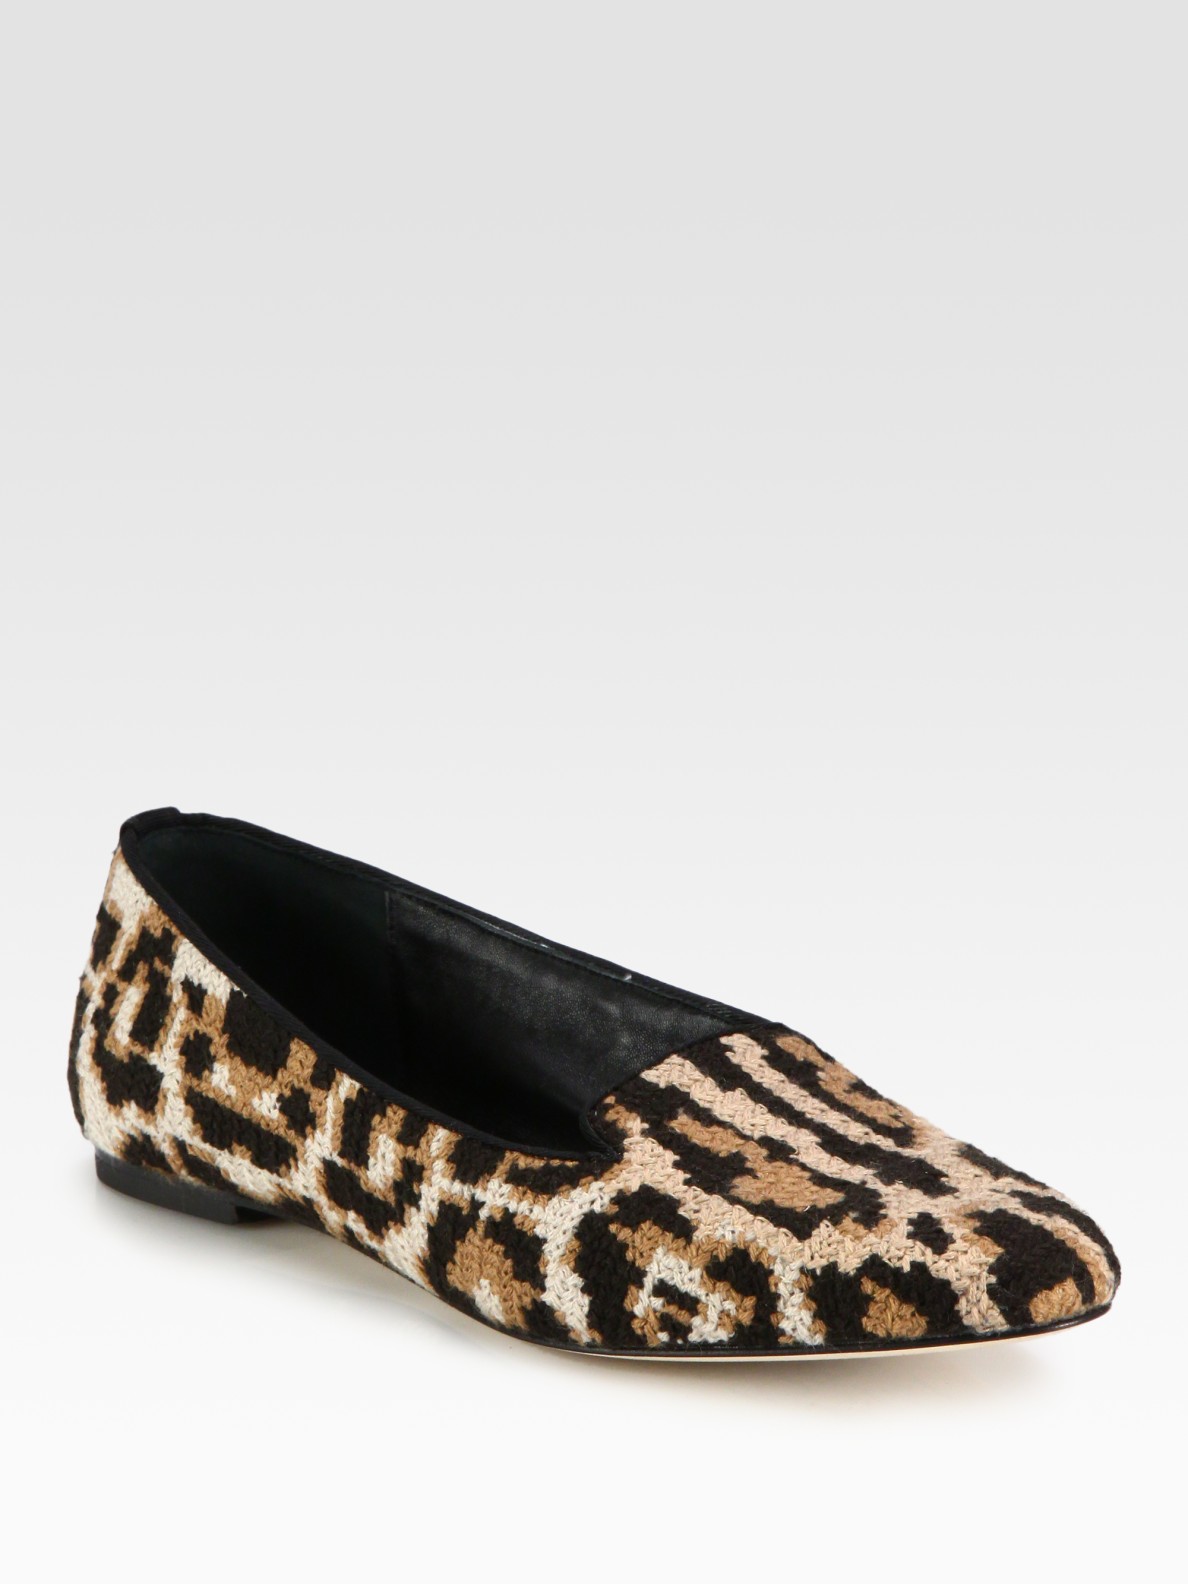 leopard smoking slippers